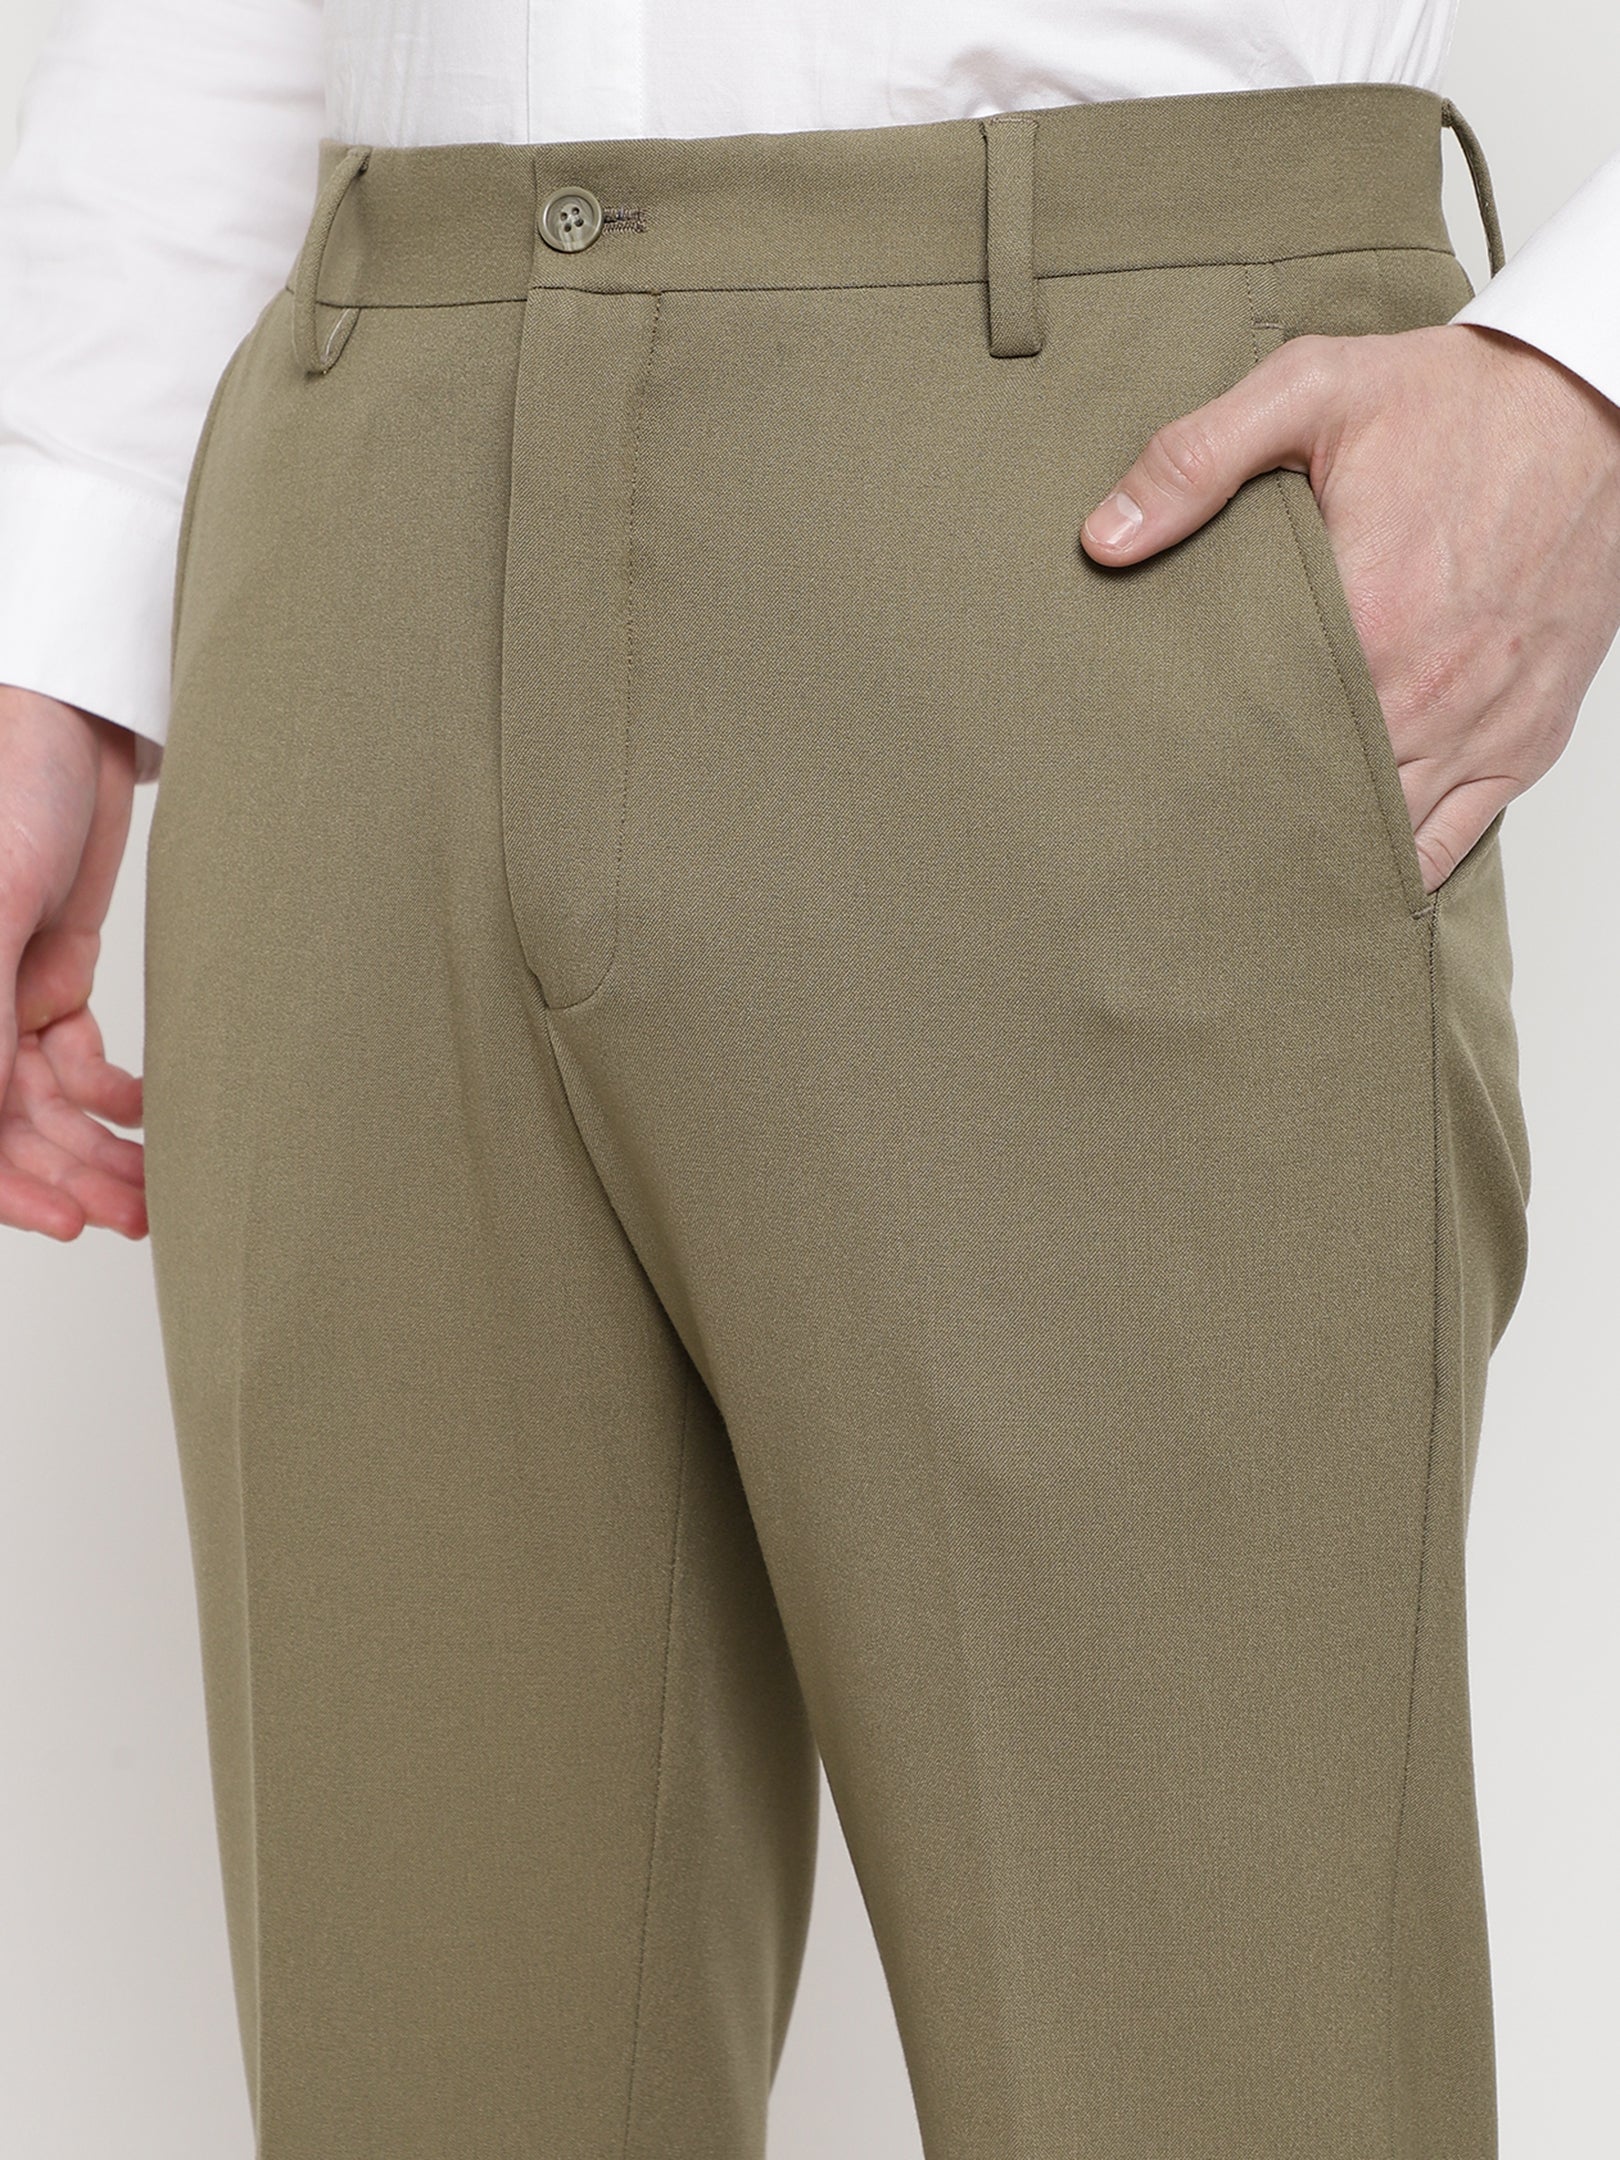 Flex Waist 4-Way Stretch Formal Trousers in Tan Khaki- Slim Fit